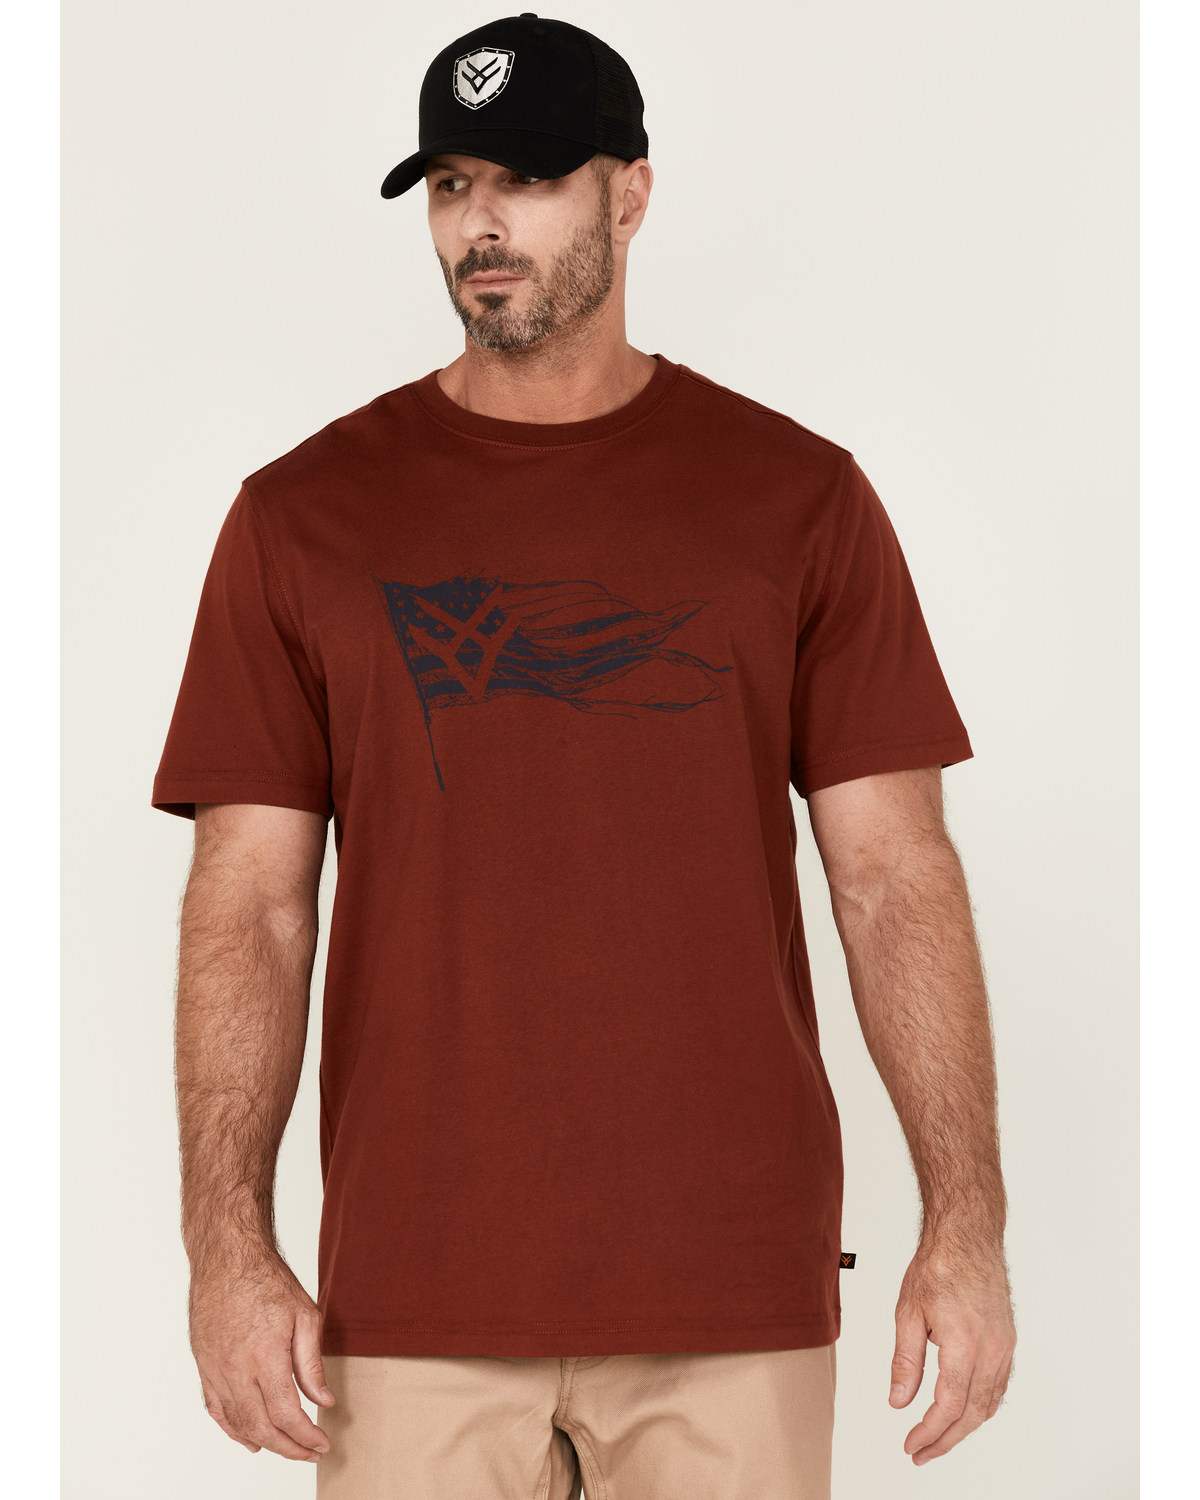 Hawx Men's Flying Flag Graphic Work T-Shirt